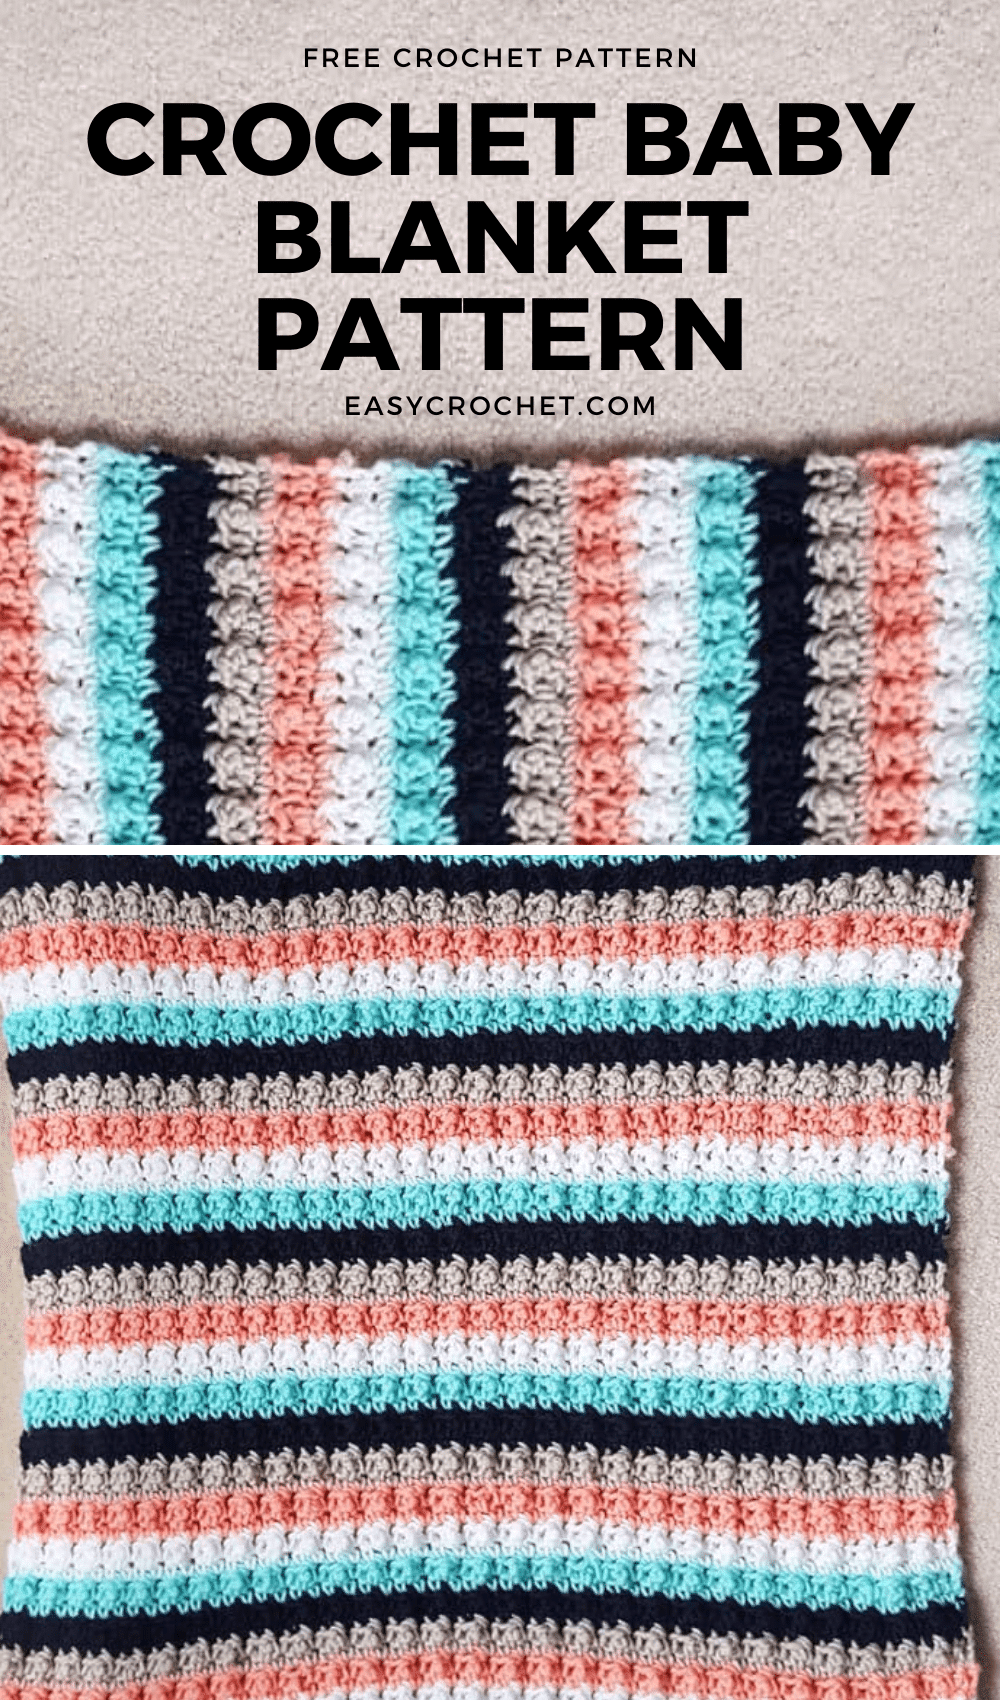 Easy Crochet Baby Blanket Pattern - Free striped crochet baby blanket pattern using simple stitches from Easy Crochet! via @easycrochetcom